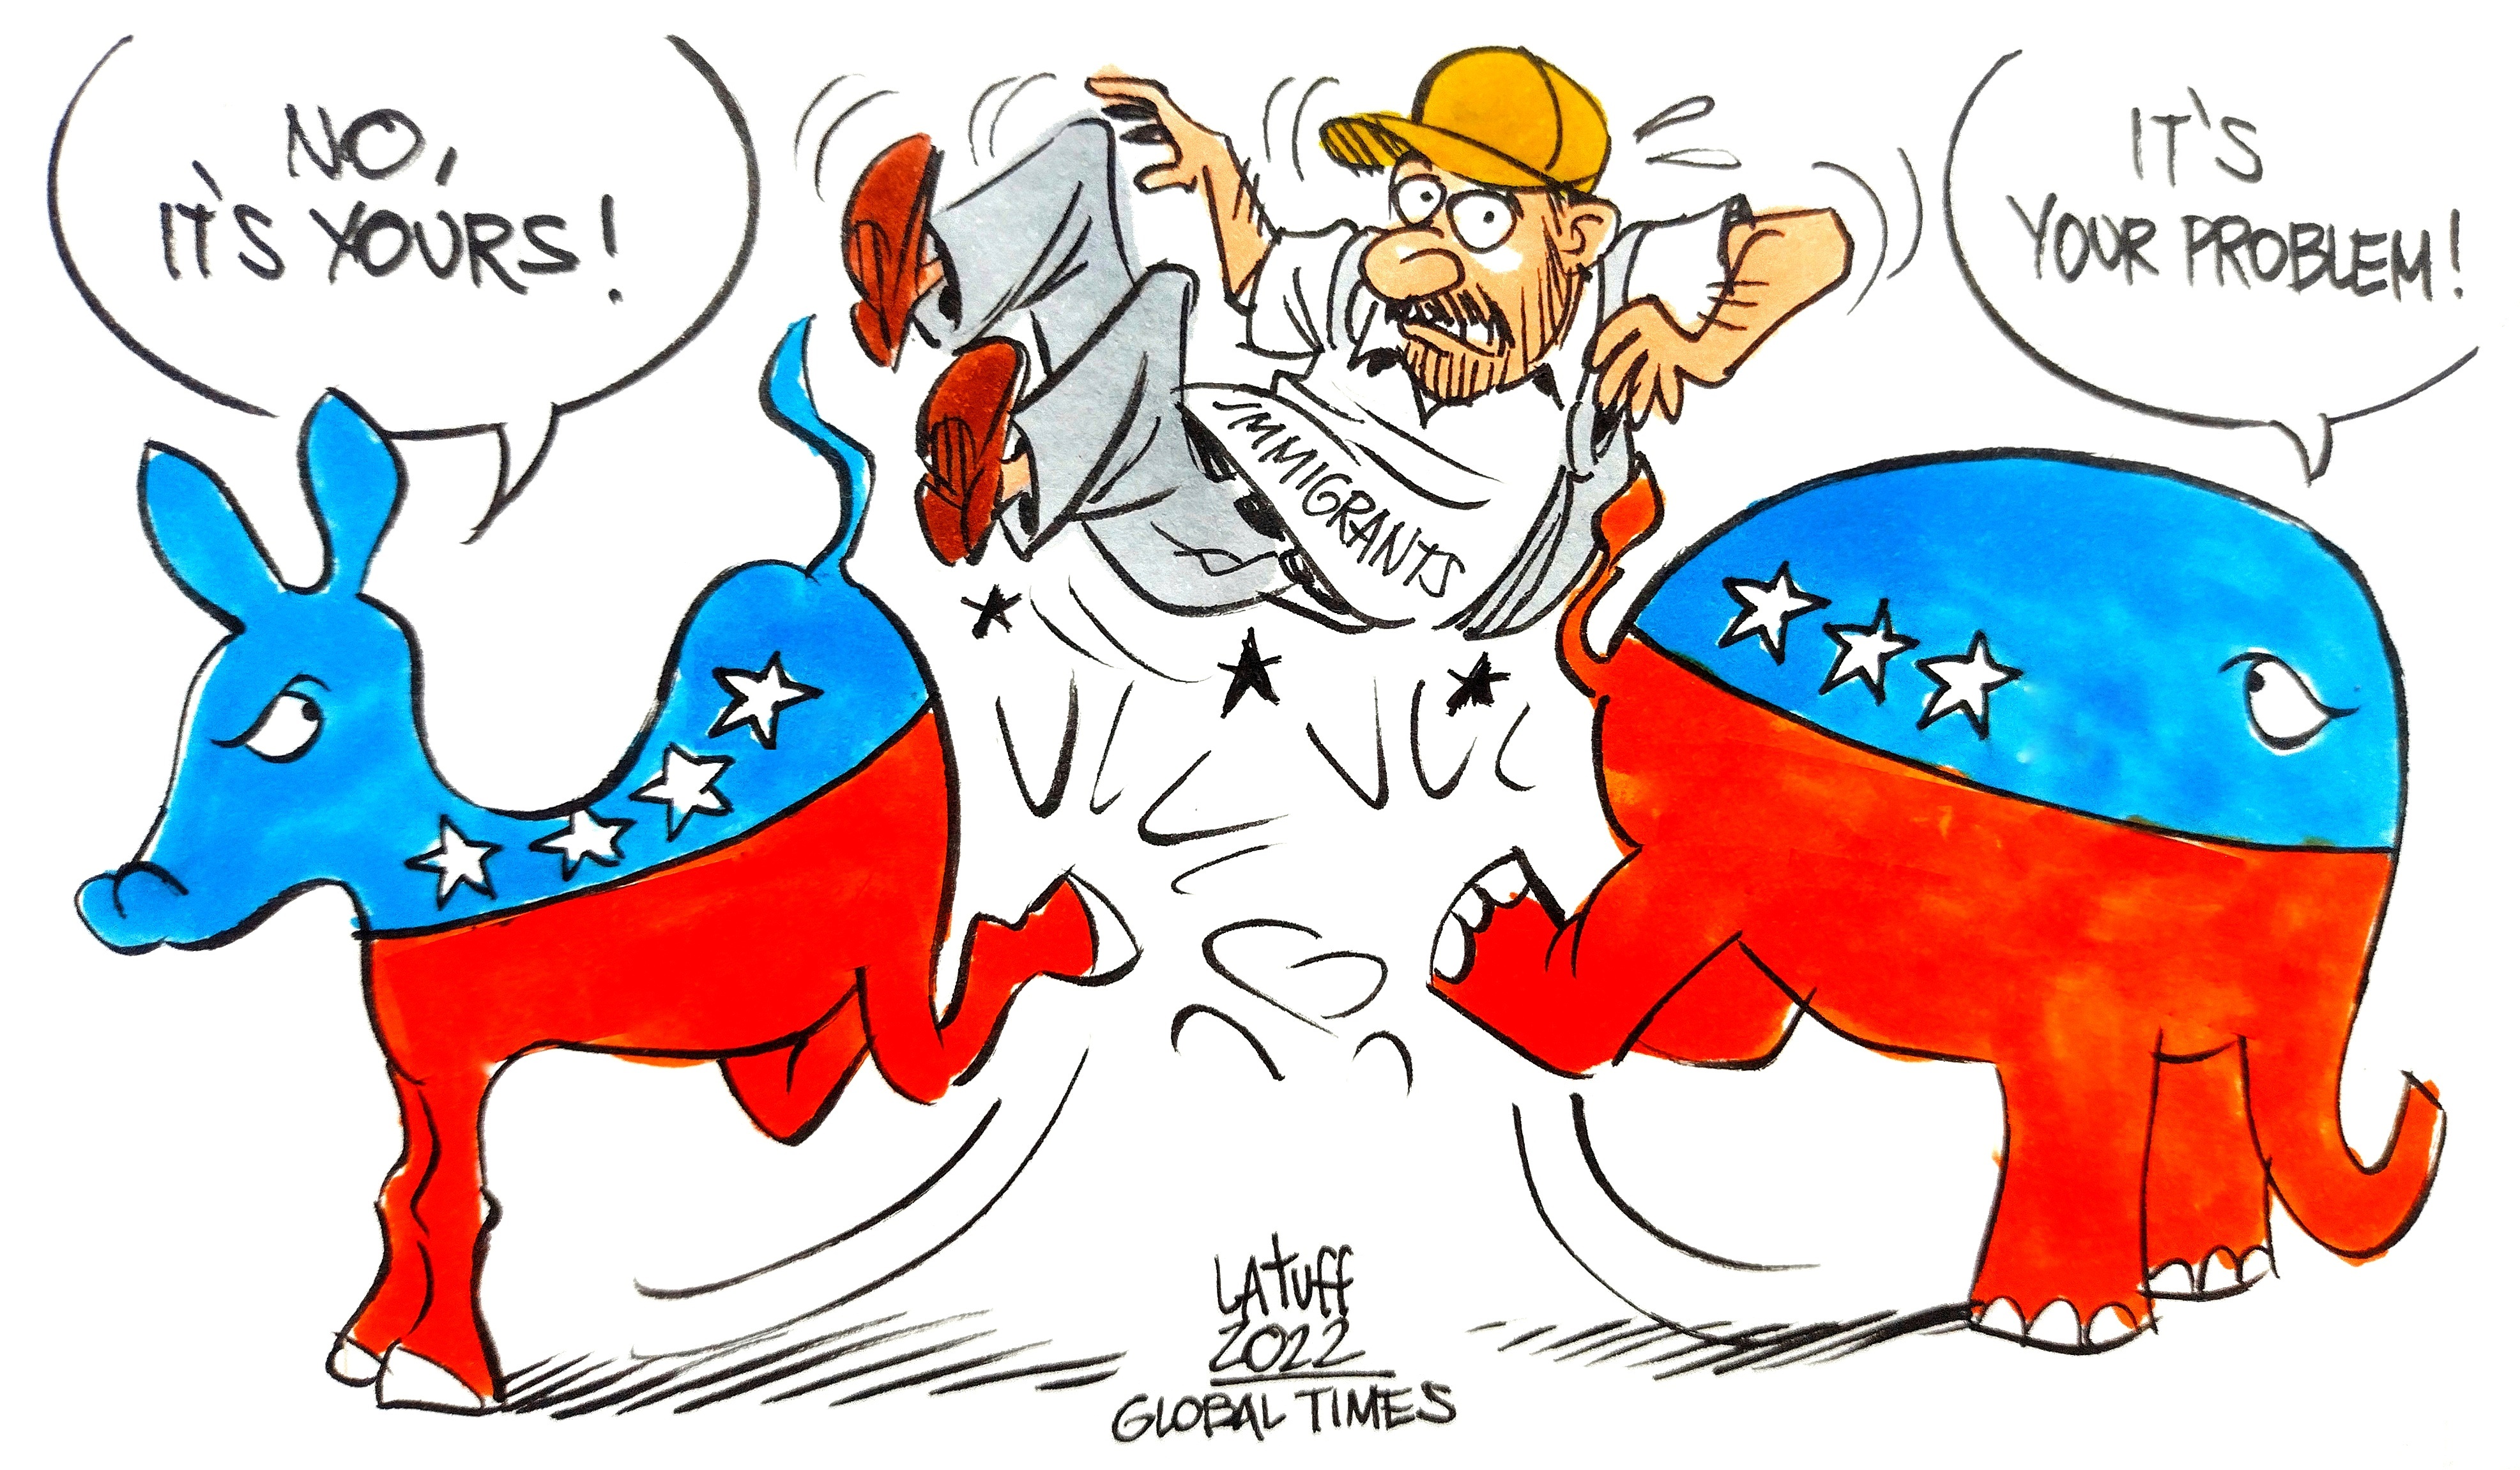 Migrants used as political pawns in US. Cartoon: Carlos Latuff